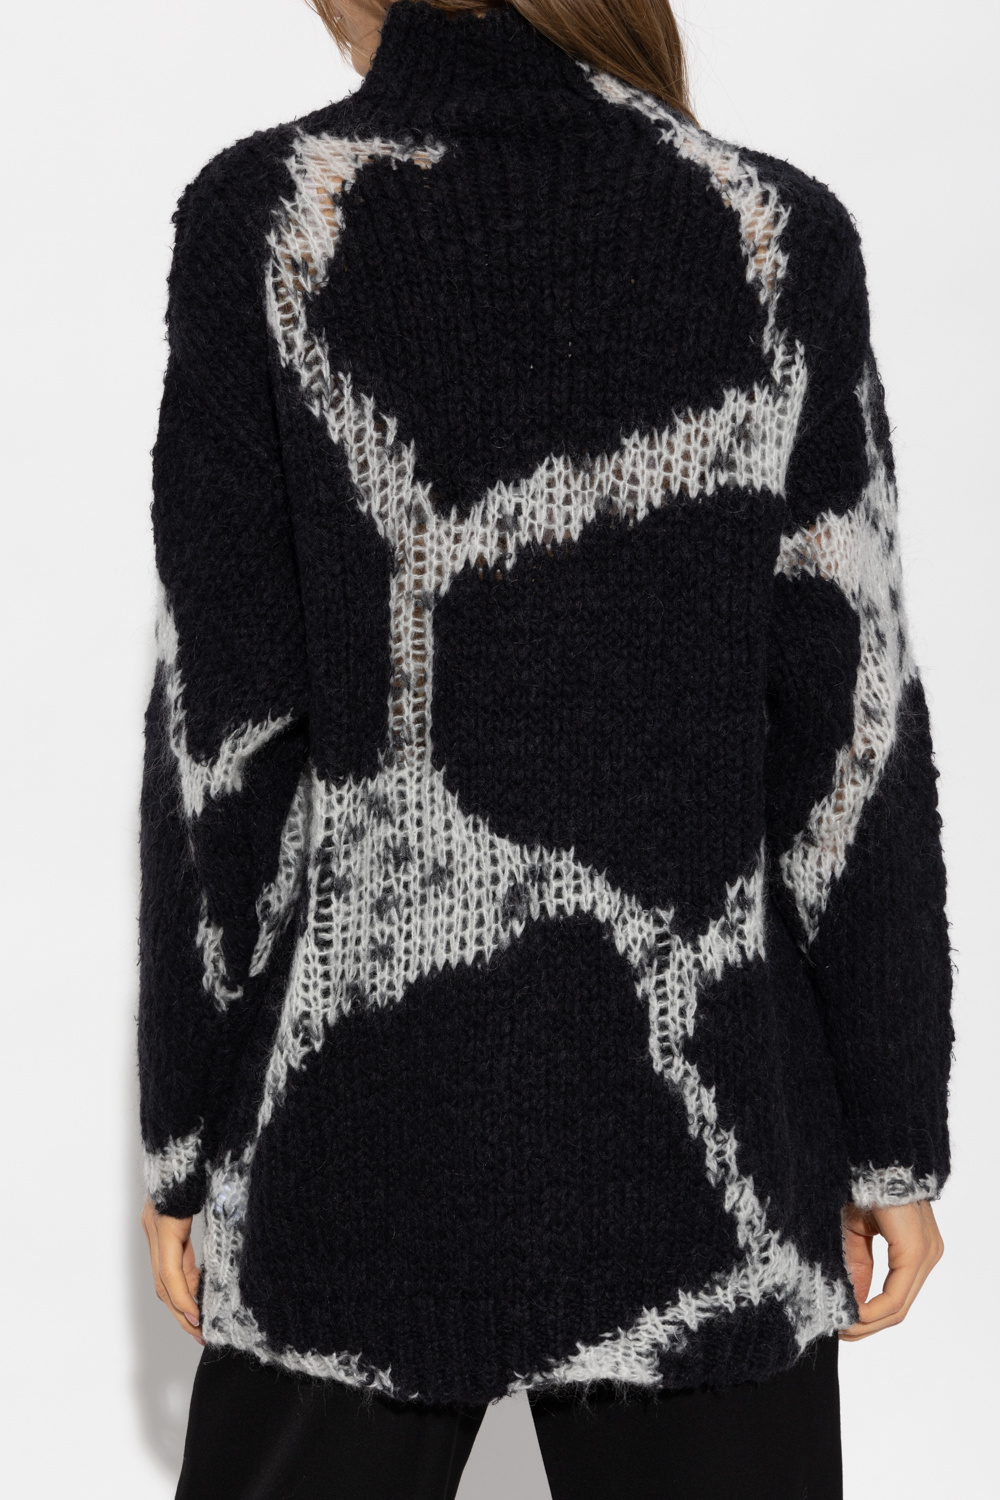 Dries Van Noten Relaxed-fitting turtleneck sweater